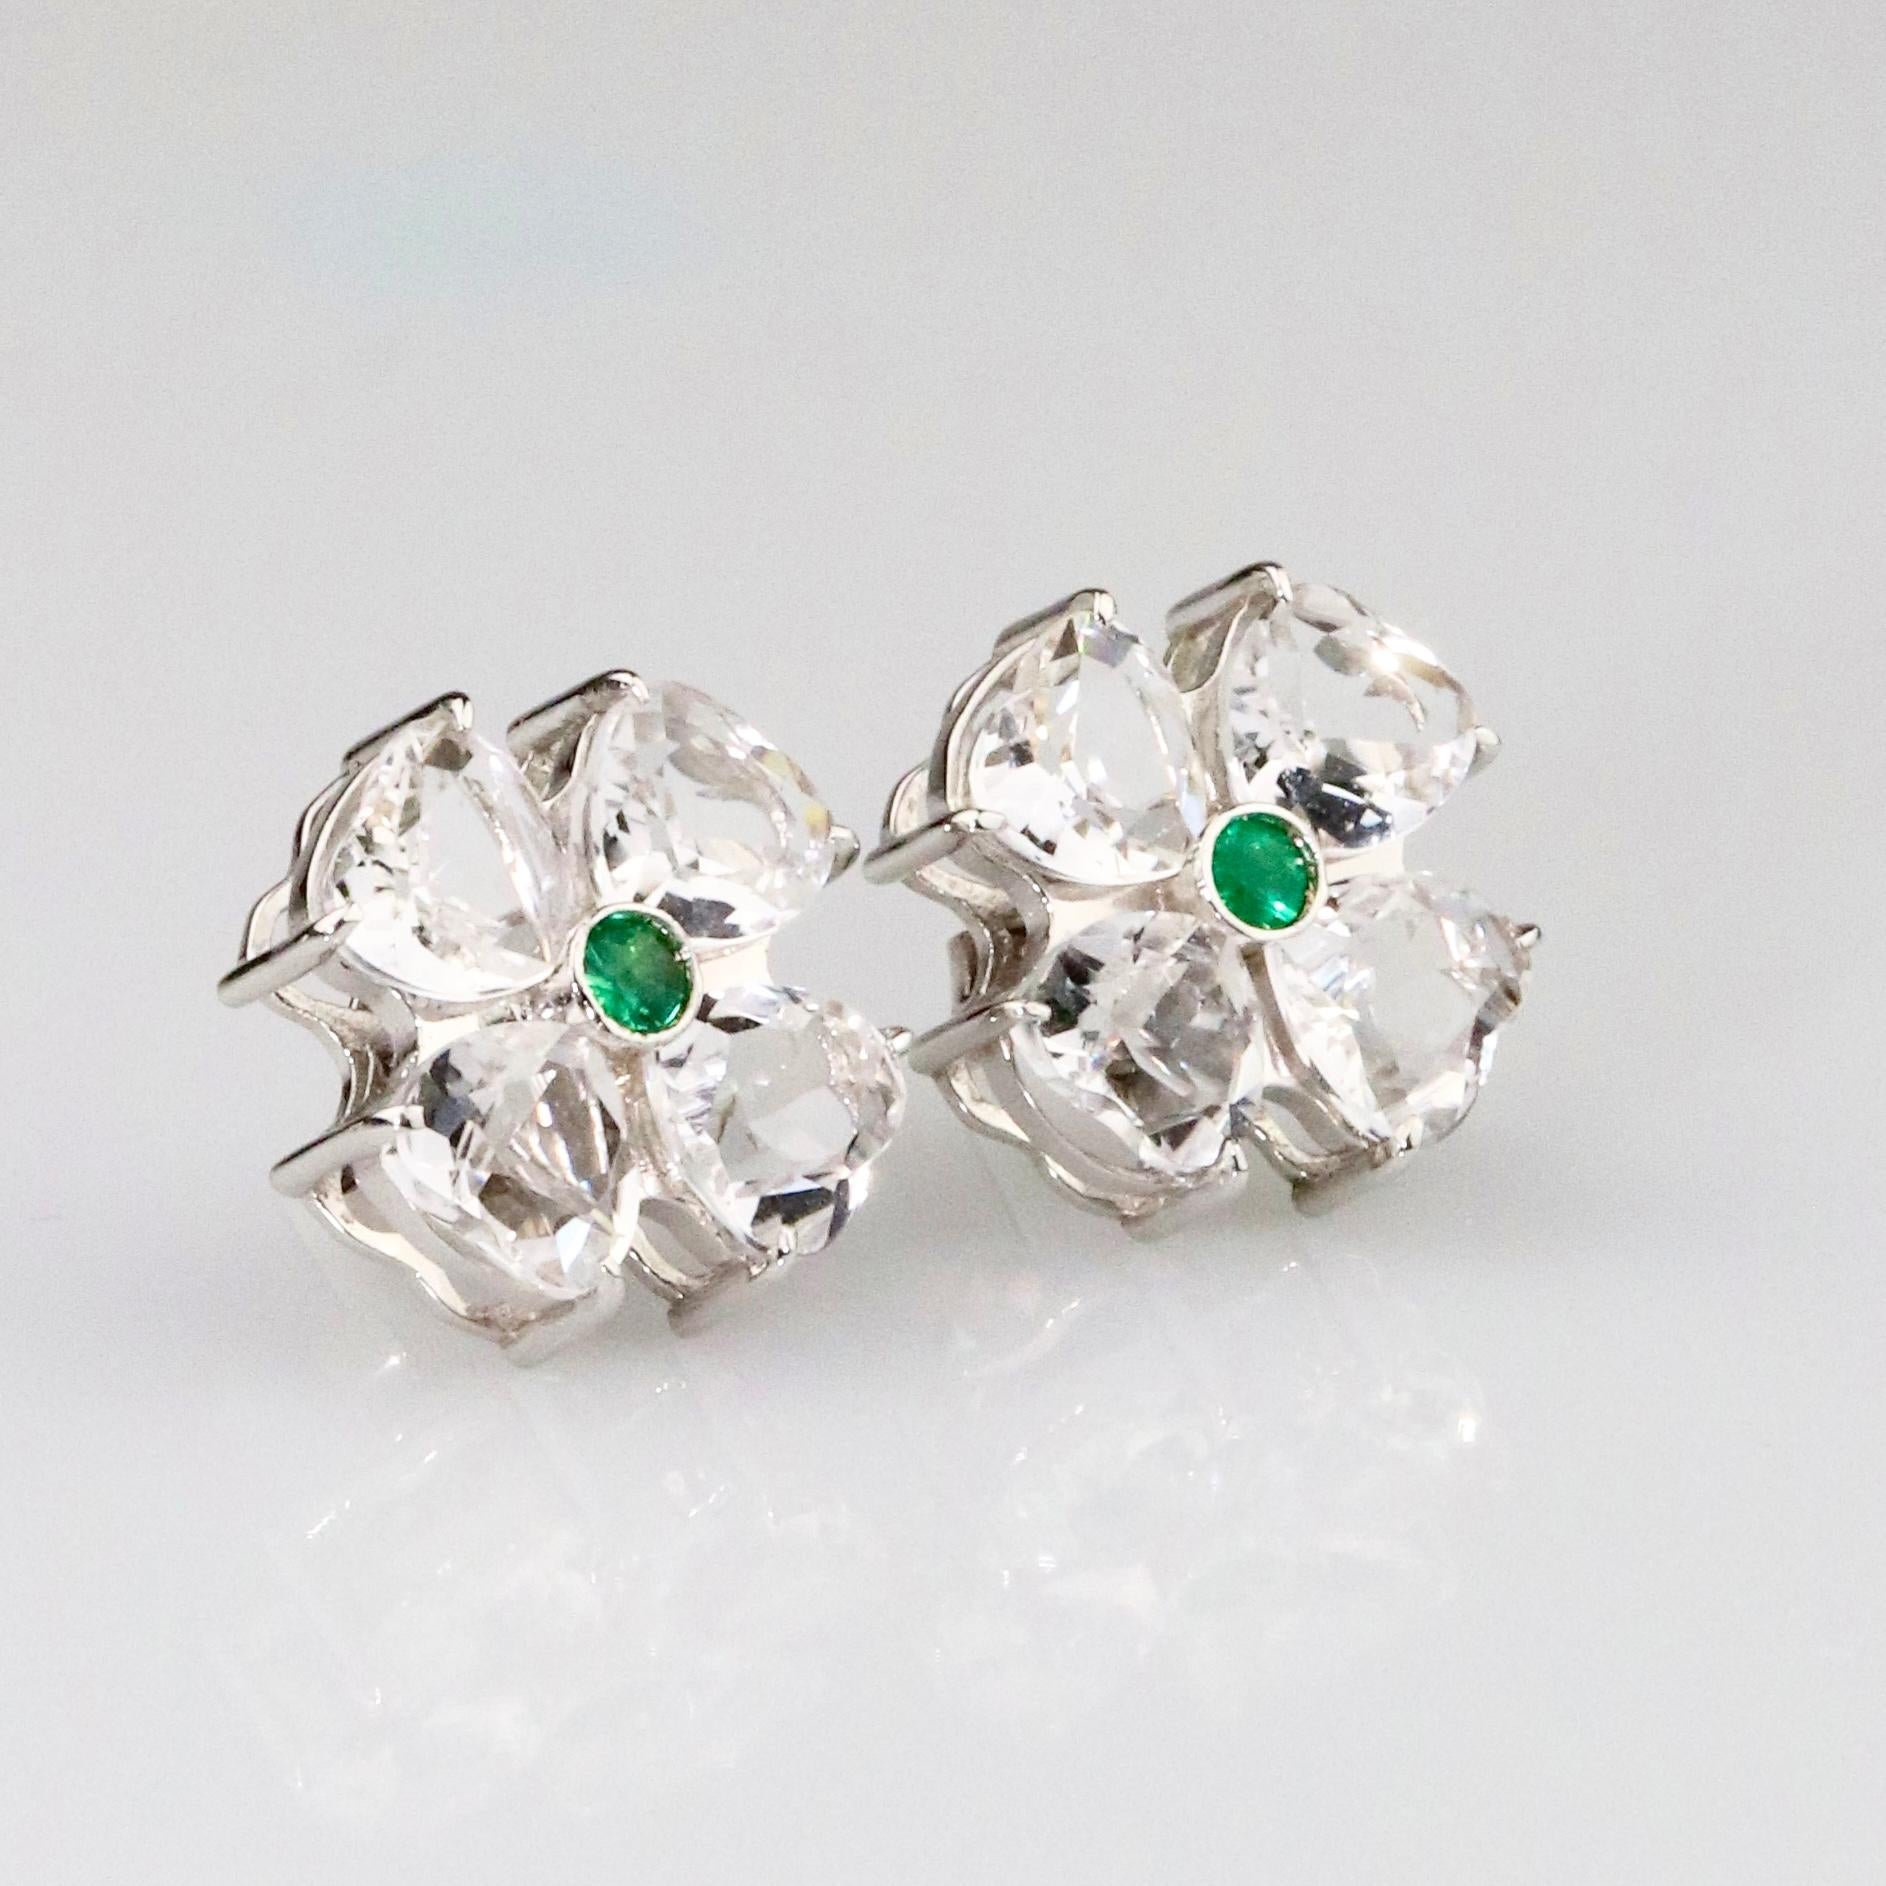 Heart Cut Flower Earrings & Emerald - 18K Solid White Gold For Sale